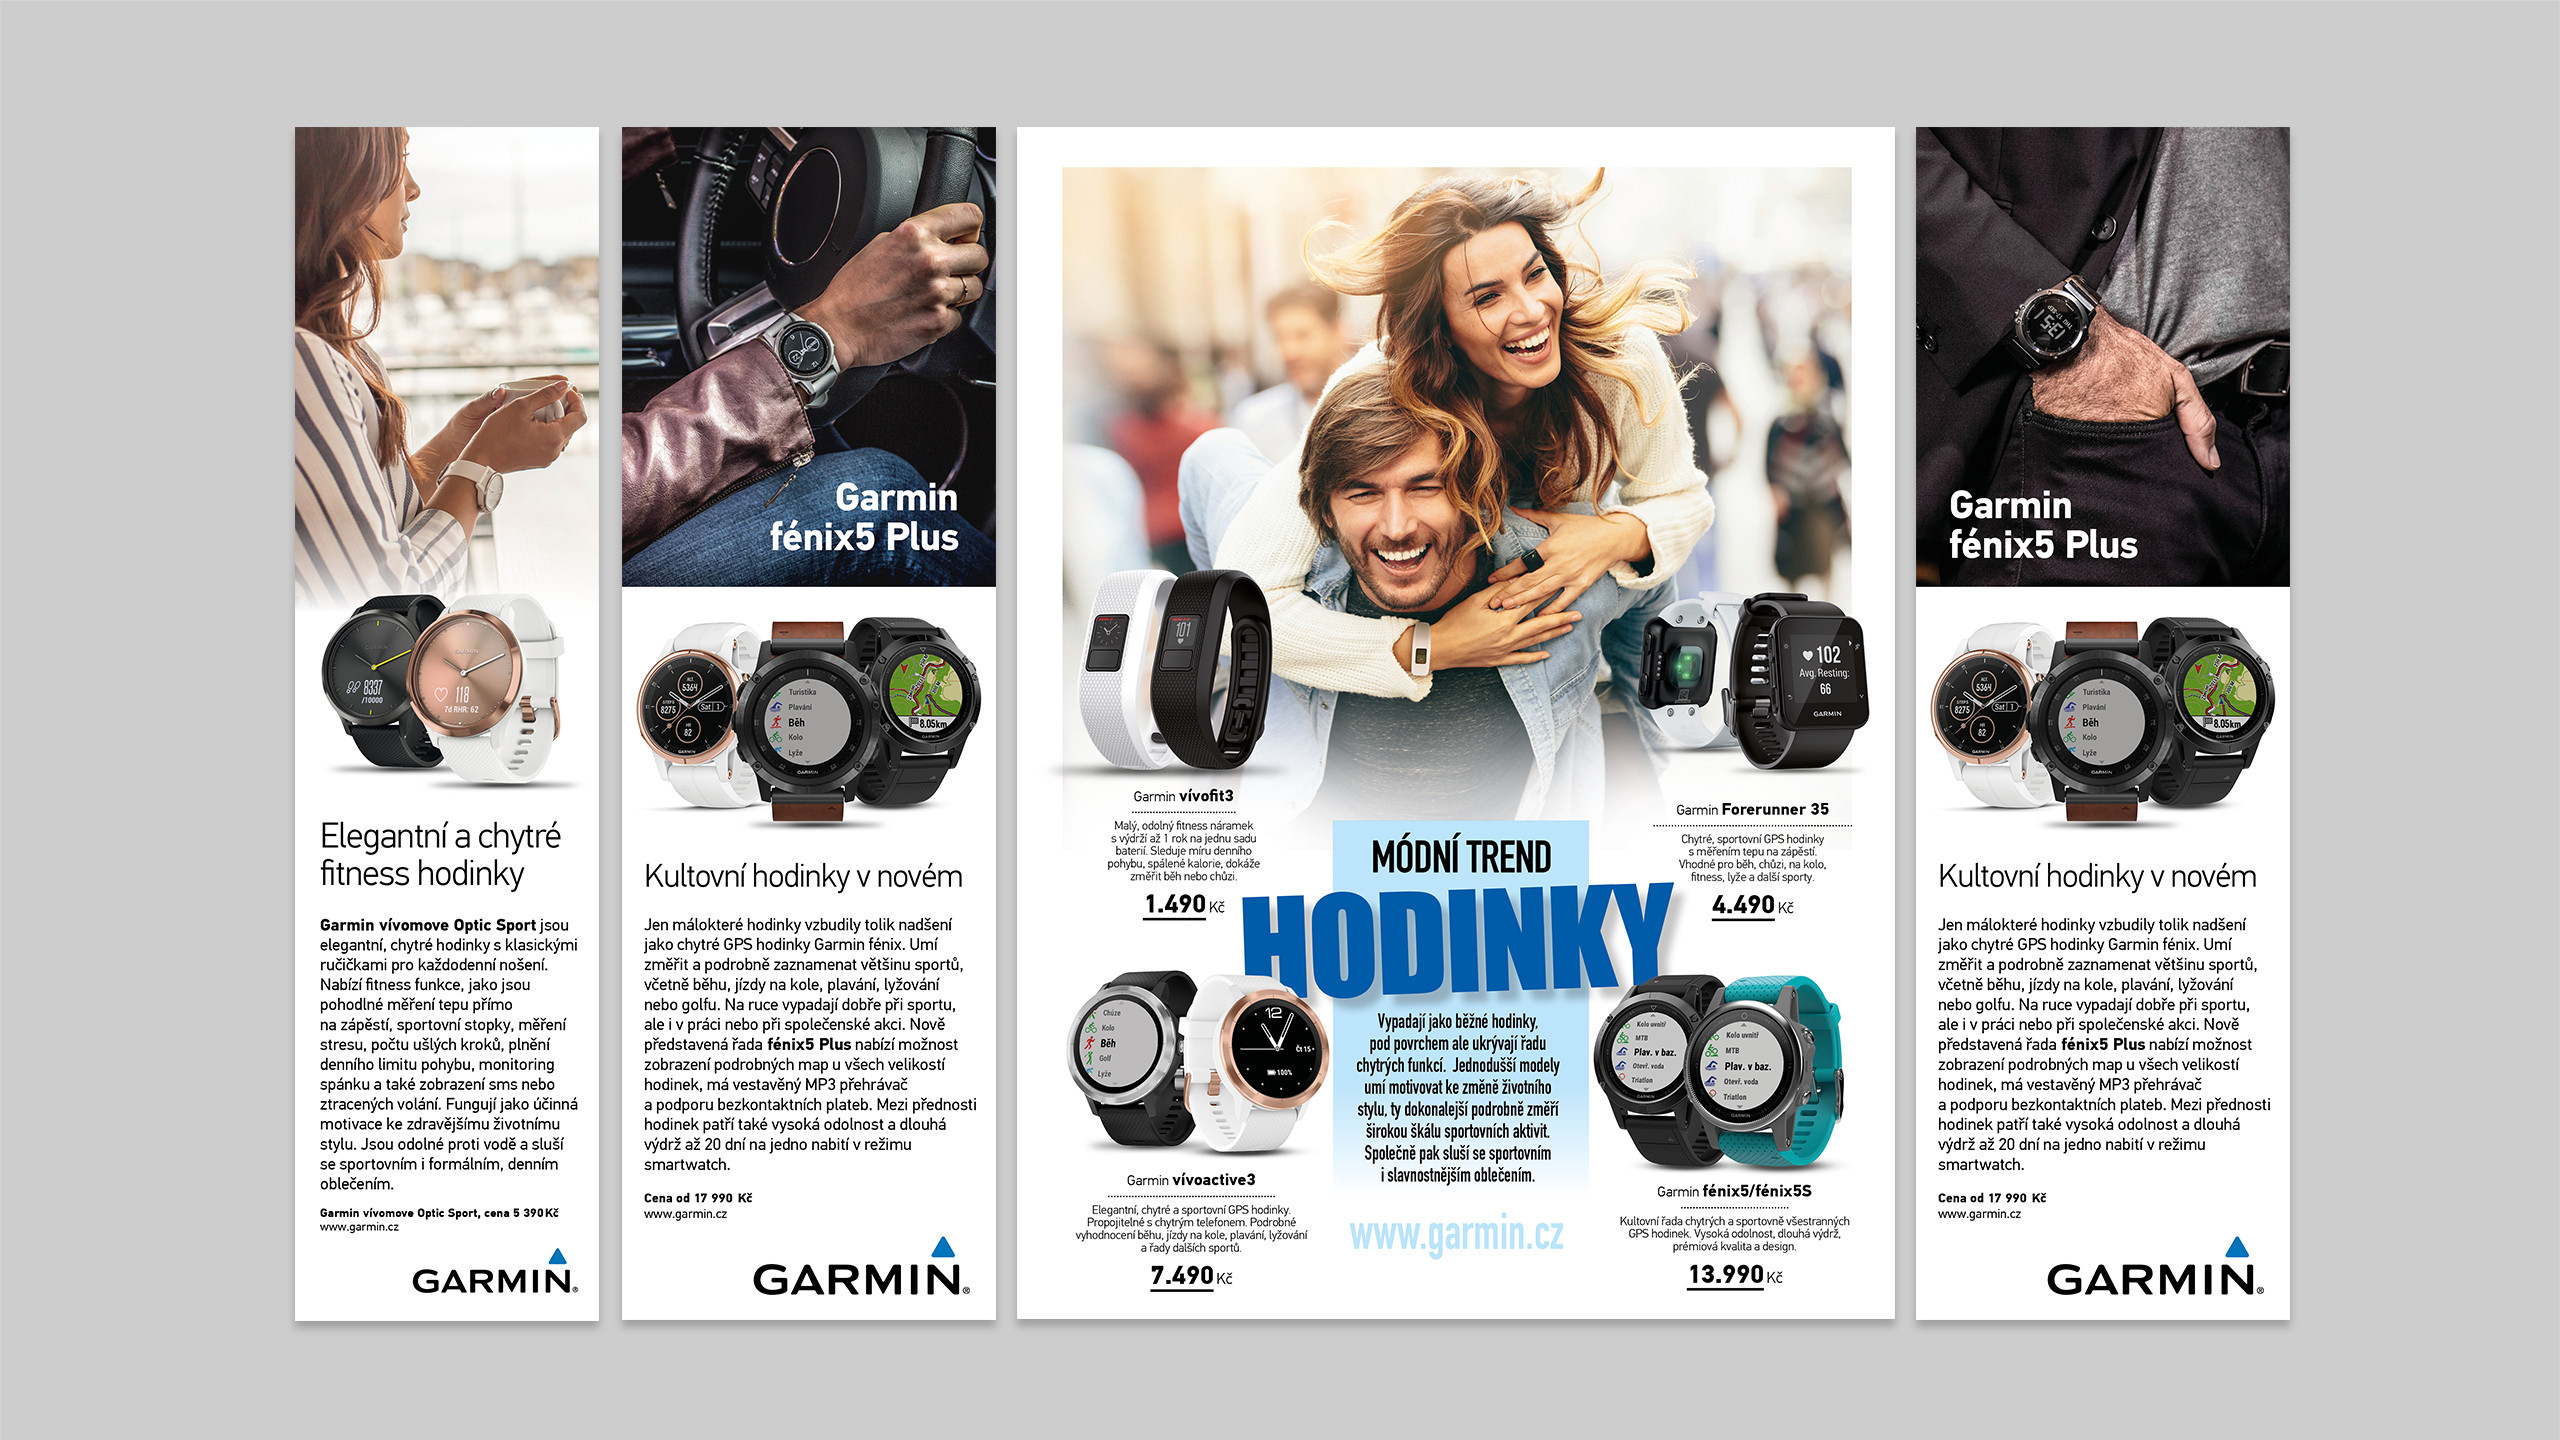 Garmin – Graphic Design & Strategy Communication 